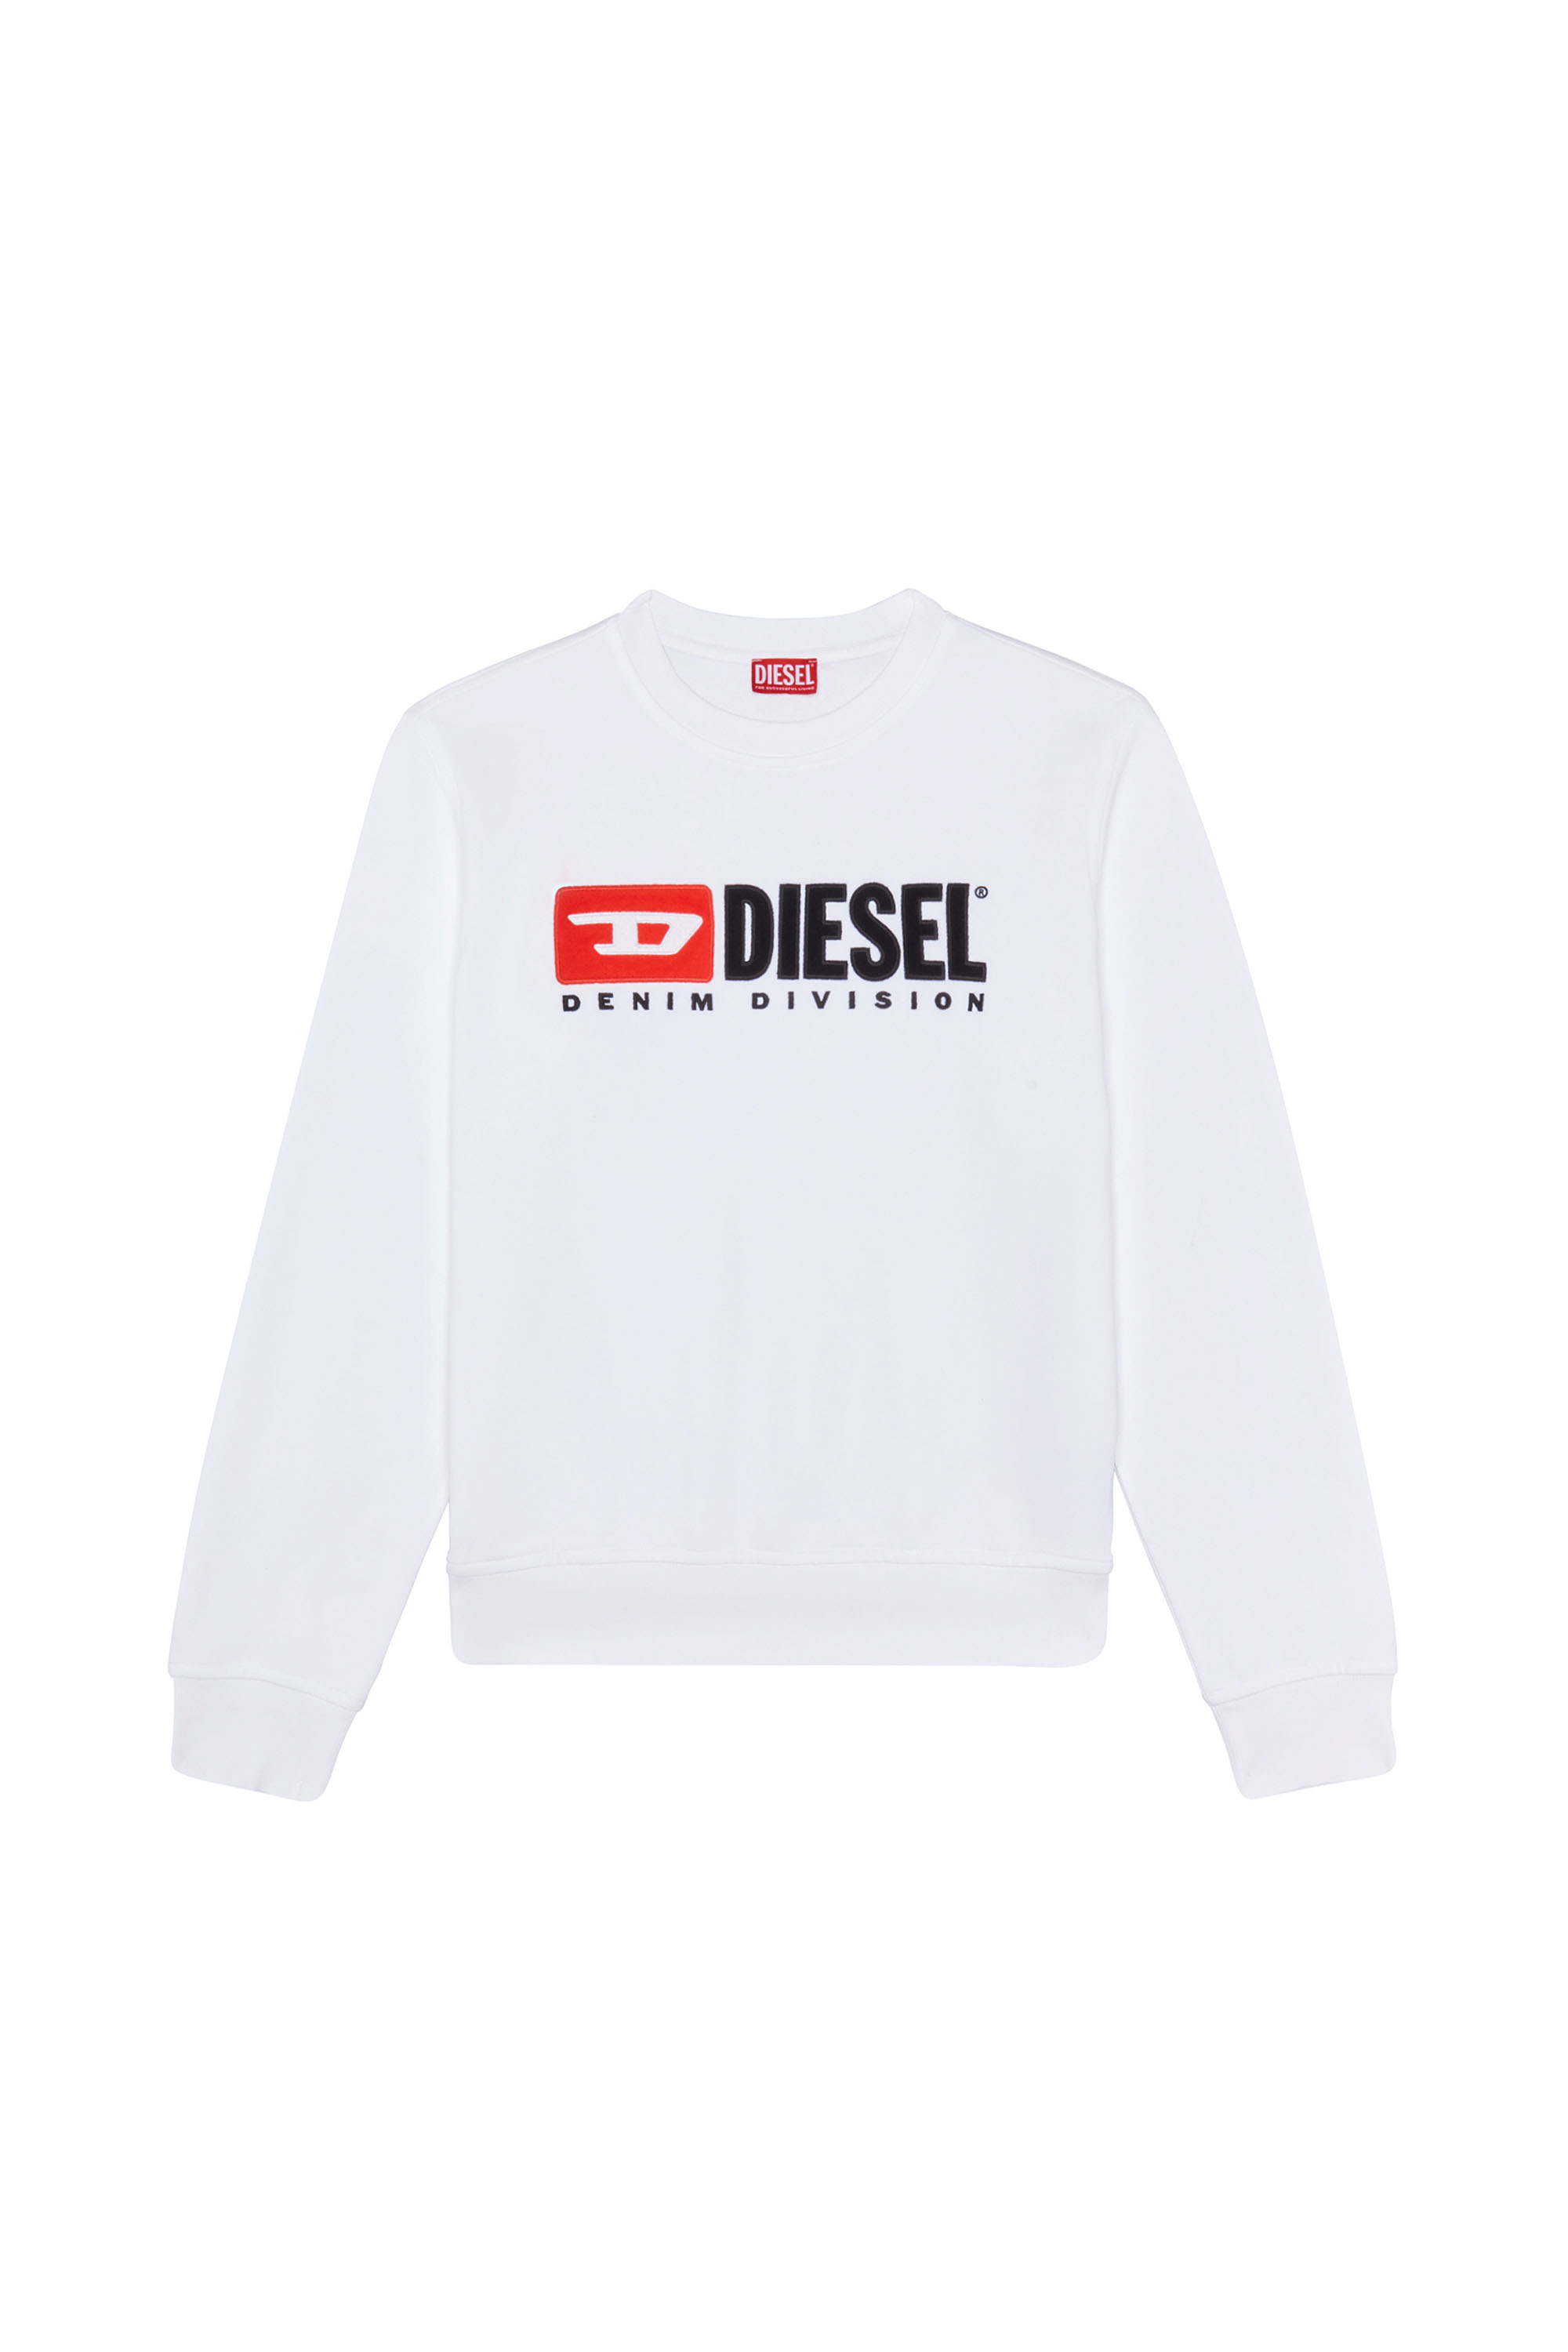 Diesel - S-GINN-DIV, White - Image 3